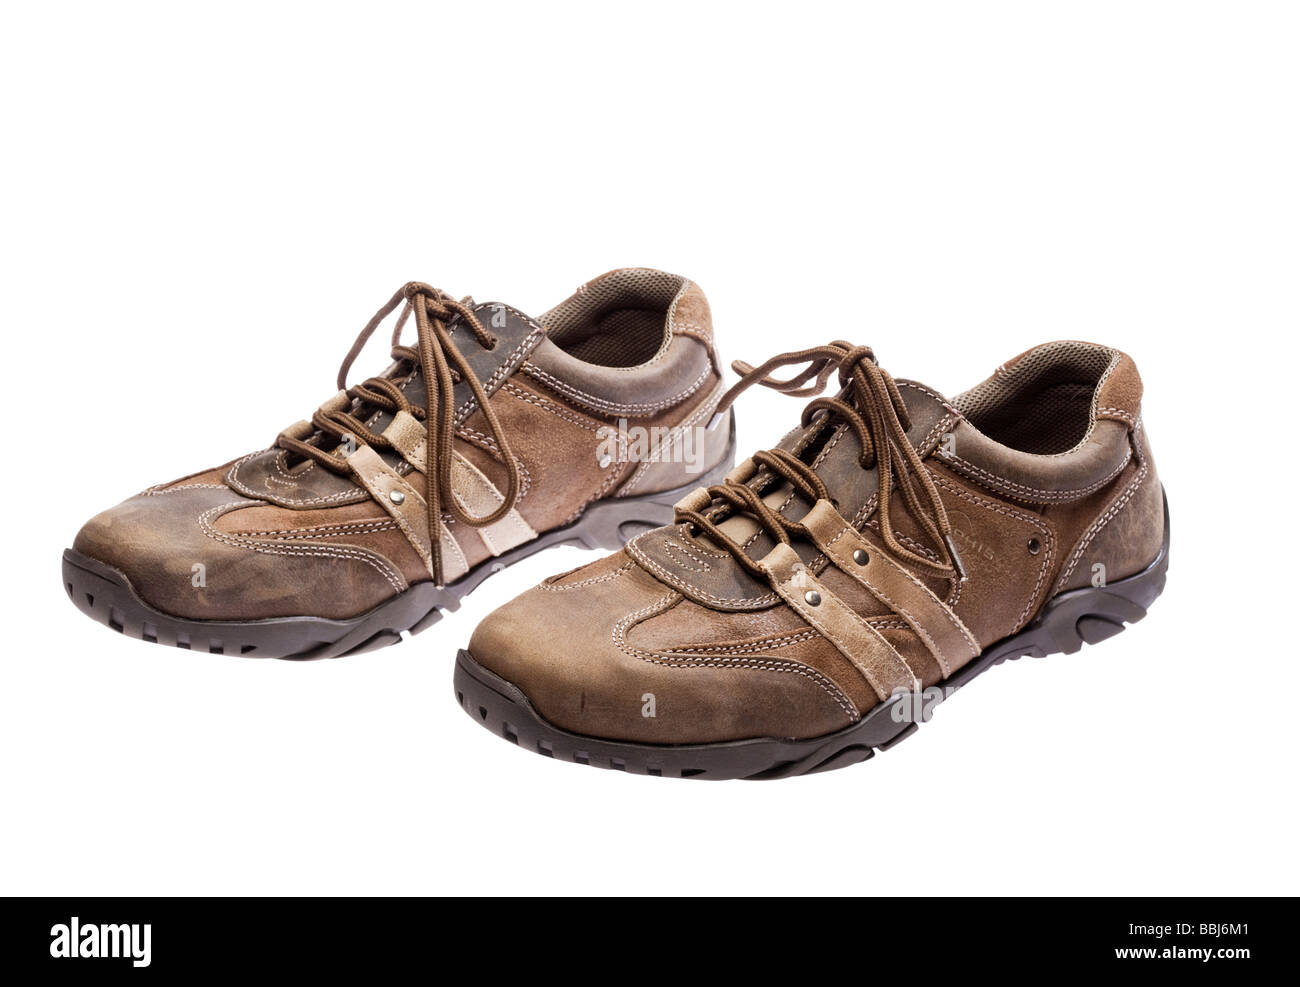 Pair of mens walking shoes Stock Photo